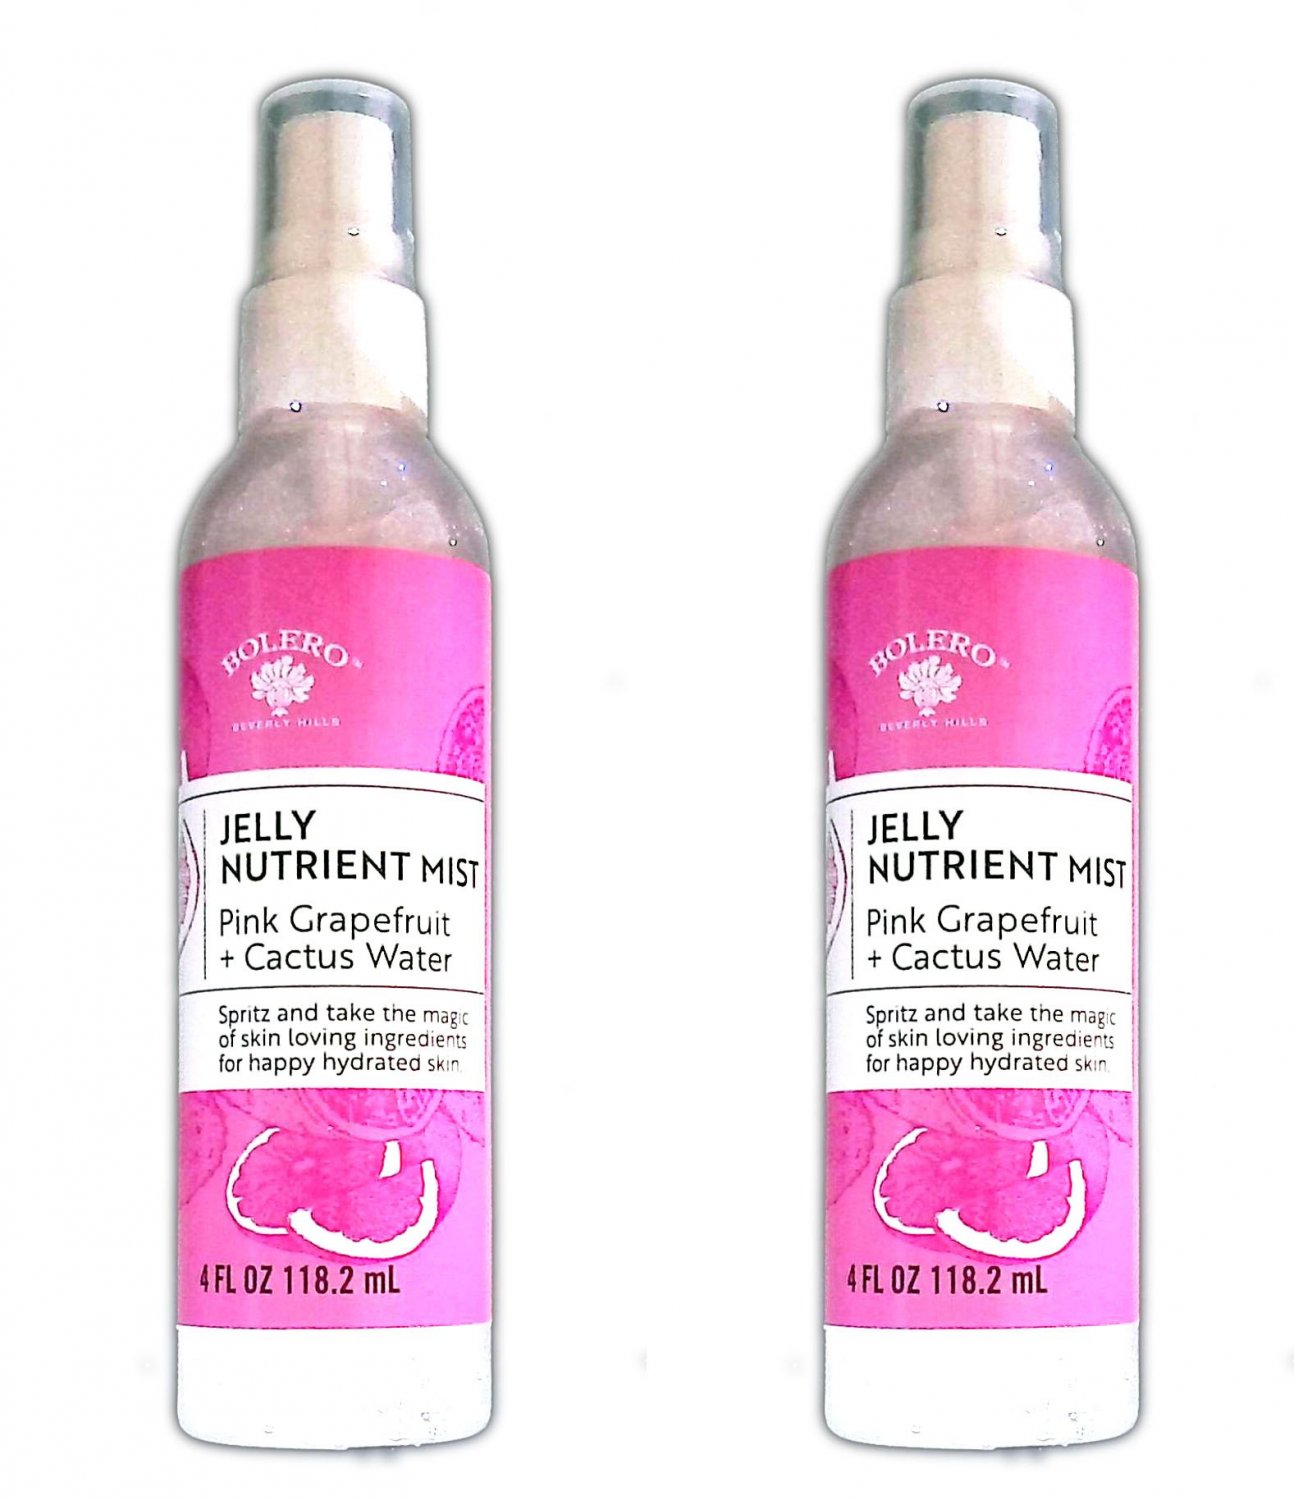 Bolero Jelly Nutrient Mist Pink Grapefruit + Cactus Water 4fl oz 118.2ml (Set of 2 Pack)